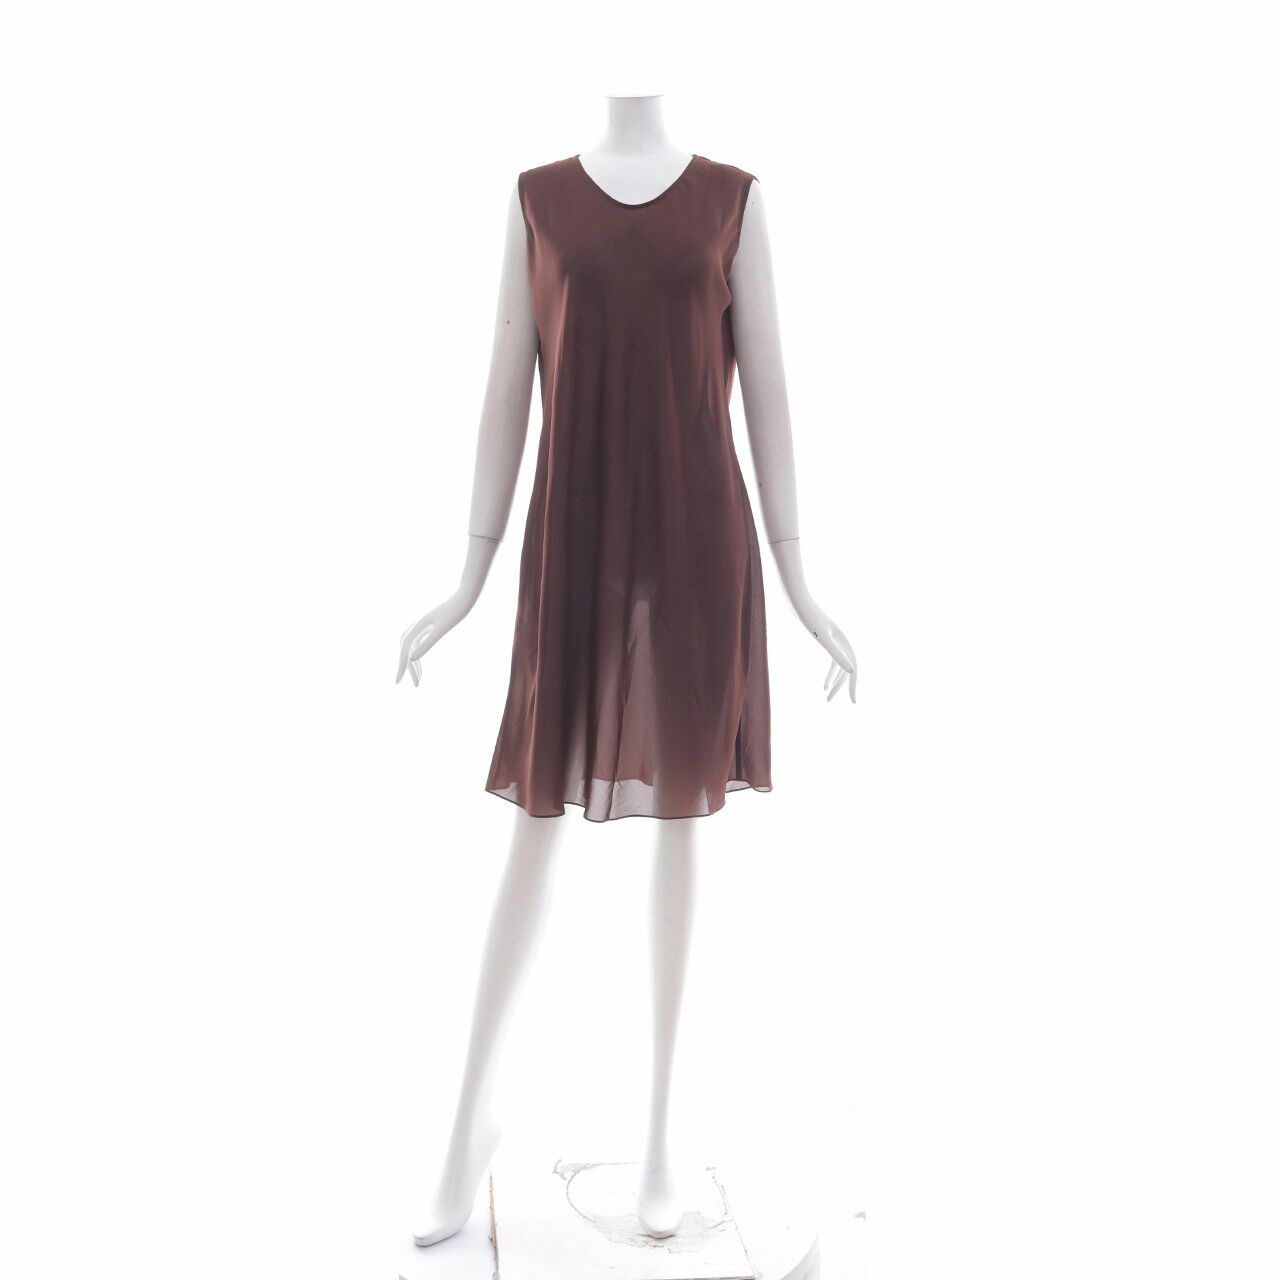 Itang Yunasz Brown Sheer Mini Dress